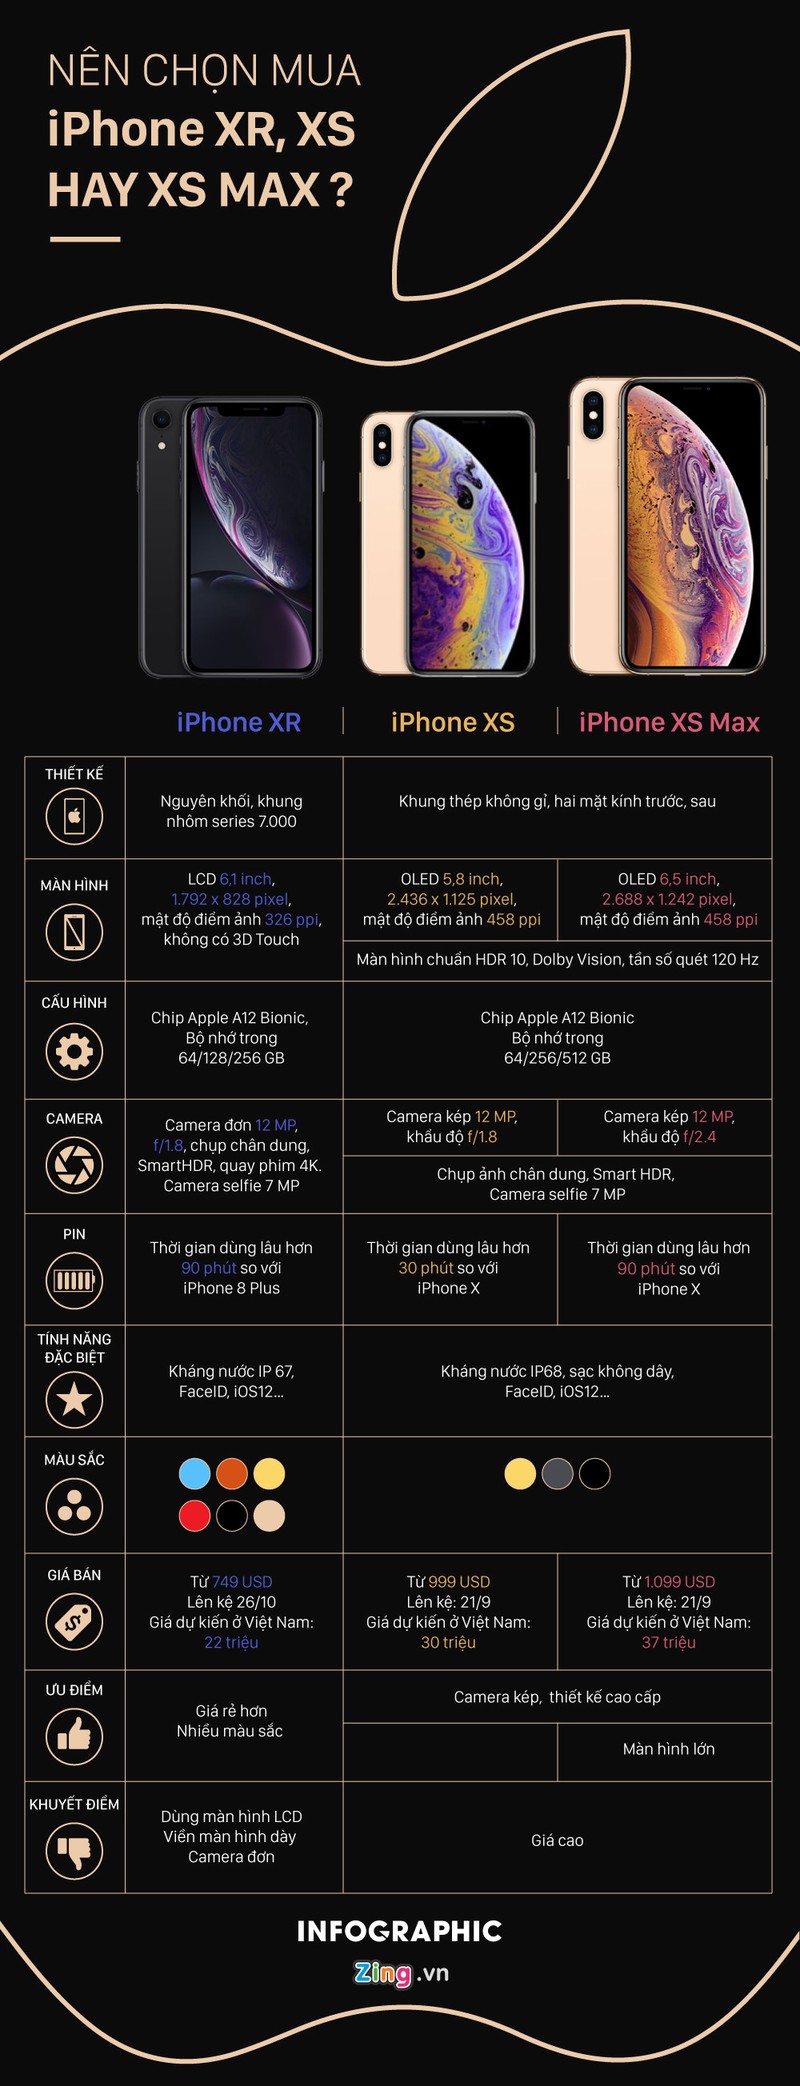 Nen mua iPhone XS, XS Max hay iPhone XR?